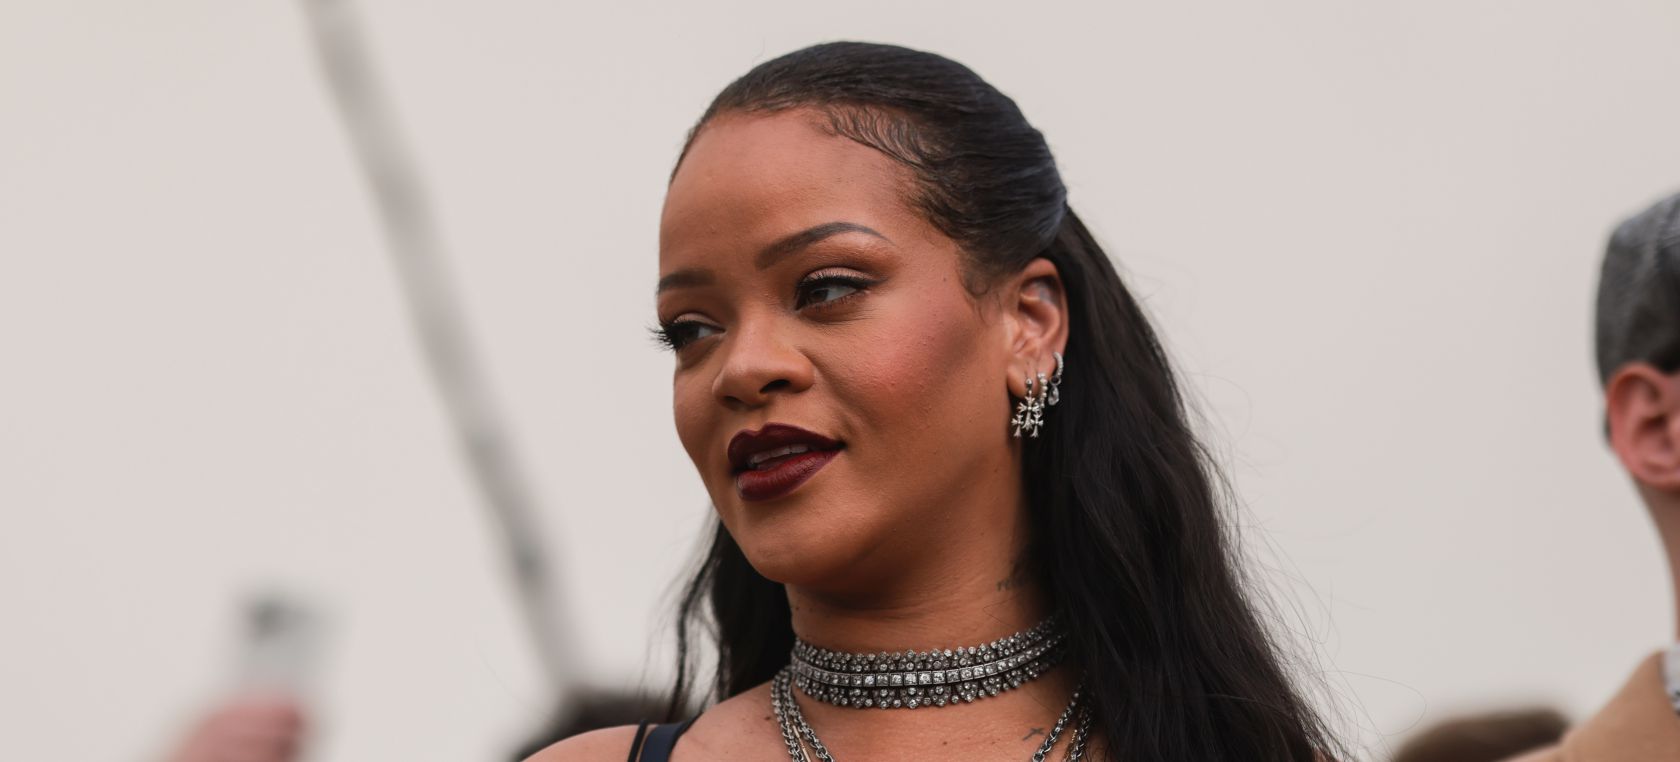 Rihanna reaparece públicamente en un festival tras ser madre